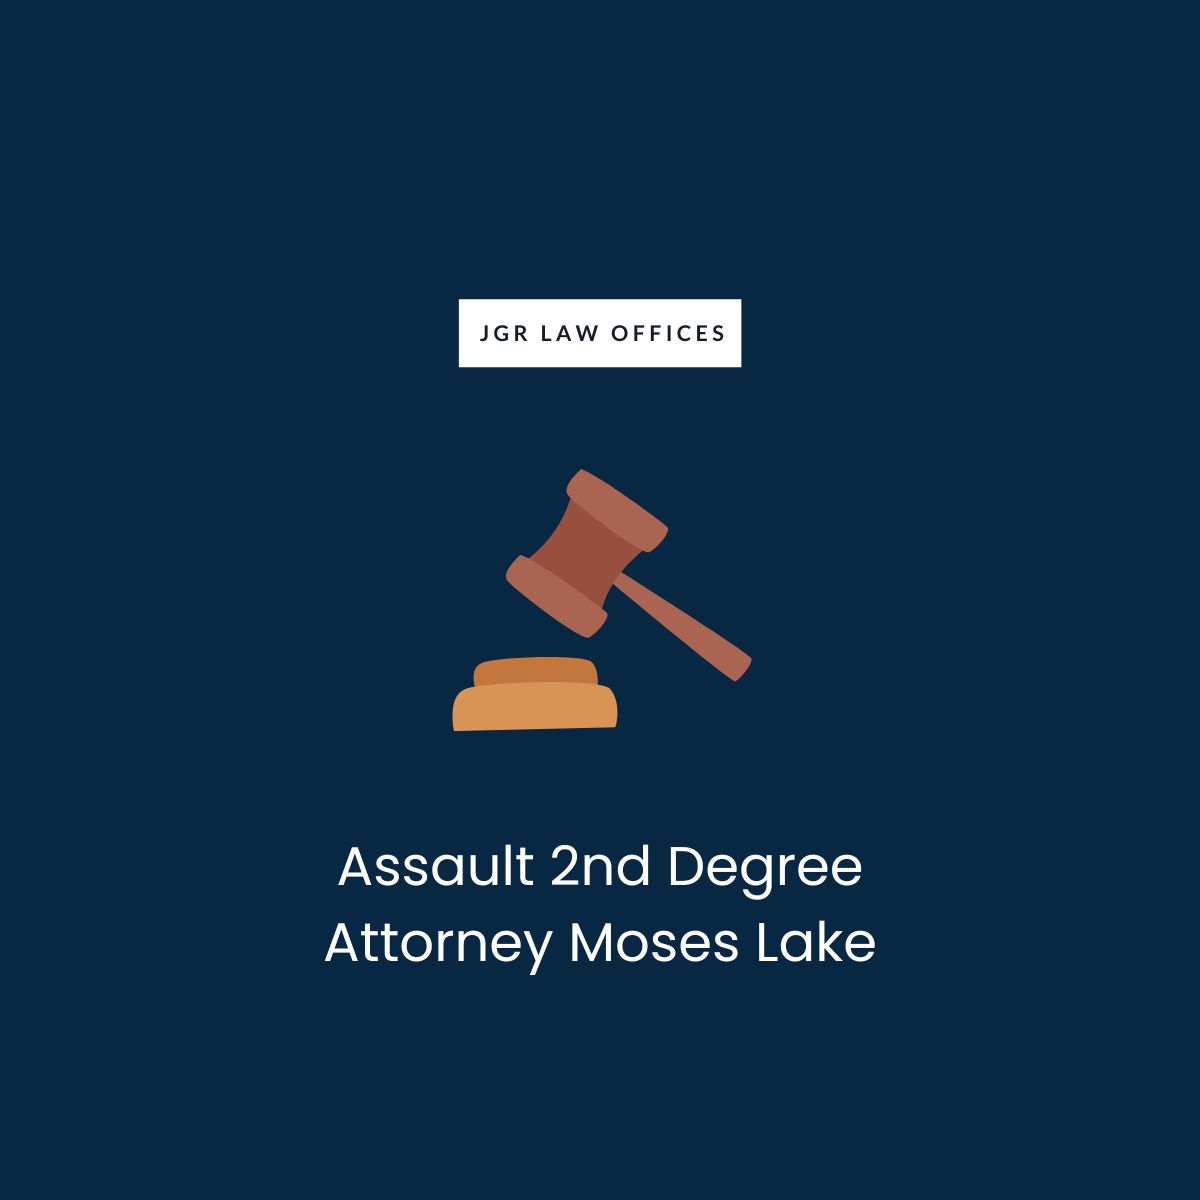 Assault 2nd Degree Lawyer Moses Lake Assault 2nd Degree Assault 2nd Degree